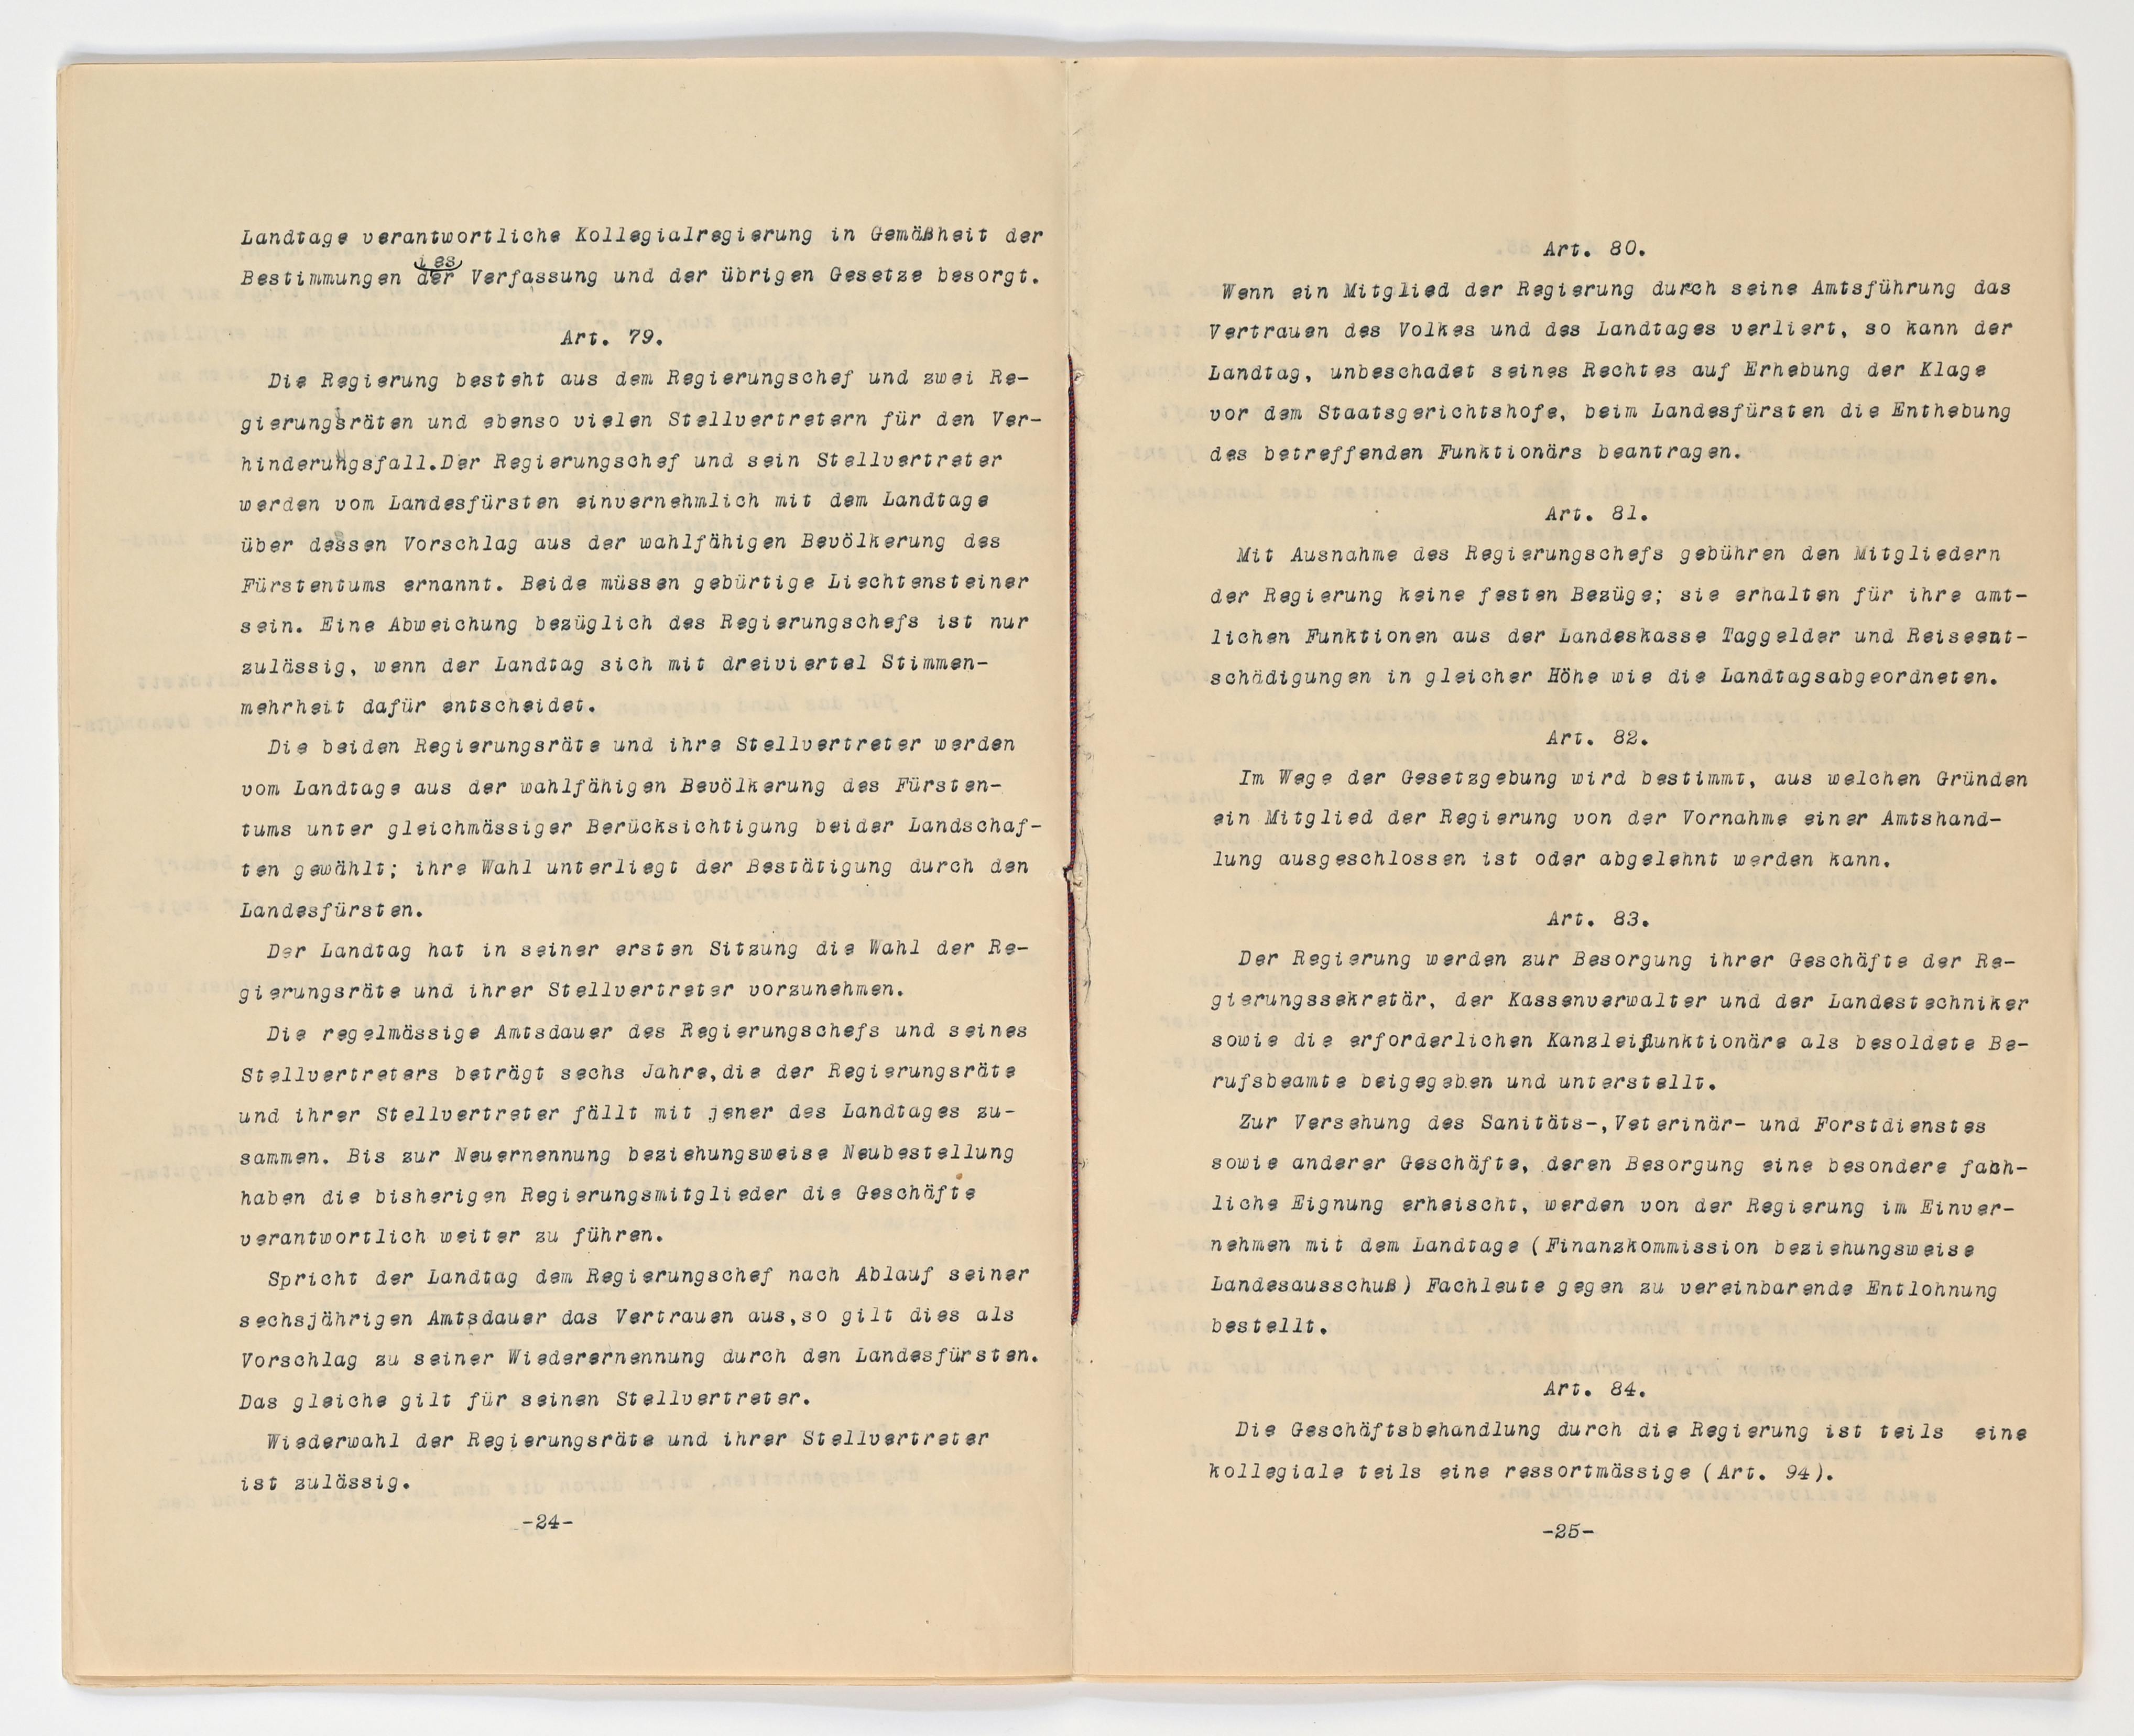 Verfassung 1921 Art. 79 bis Art. 84